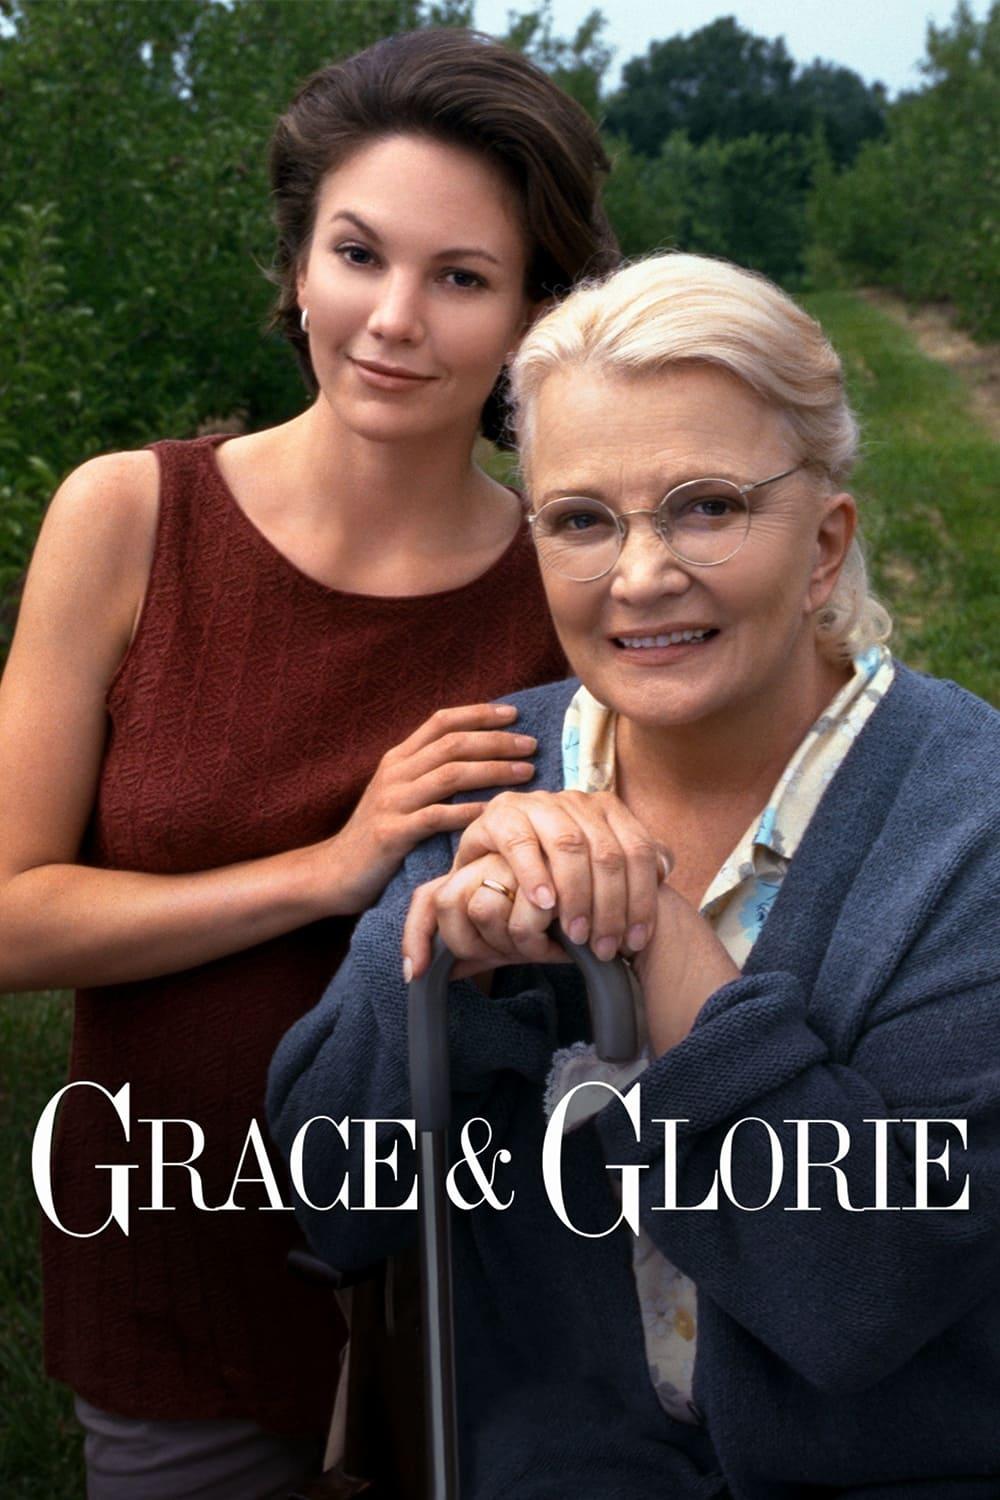 Grace & Glorie poster